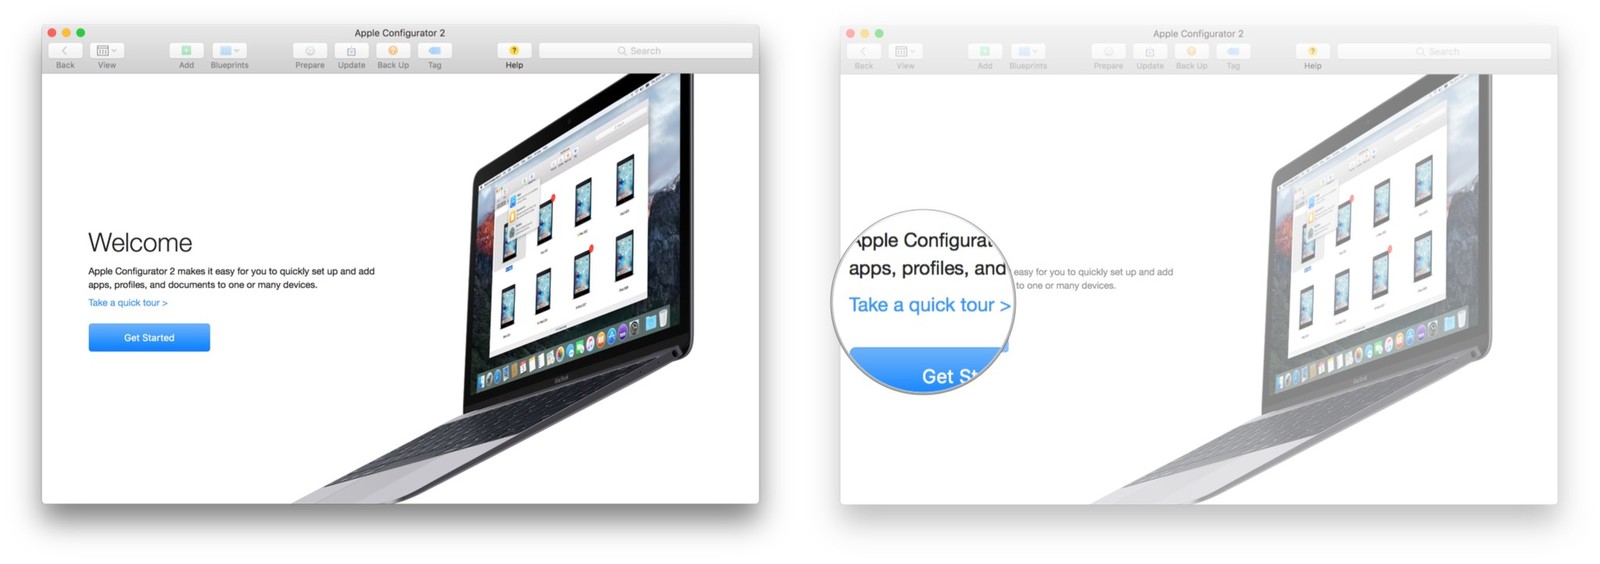 apple configurator 2 ipad